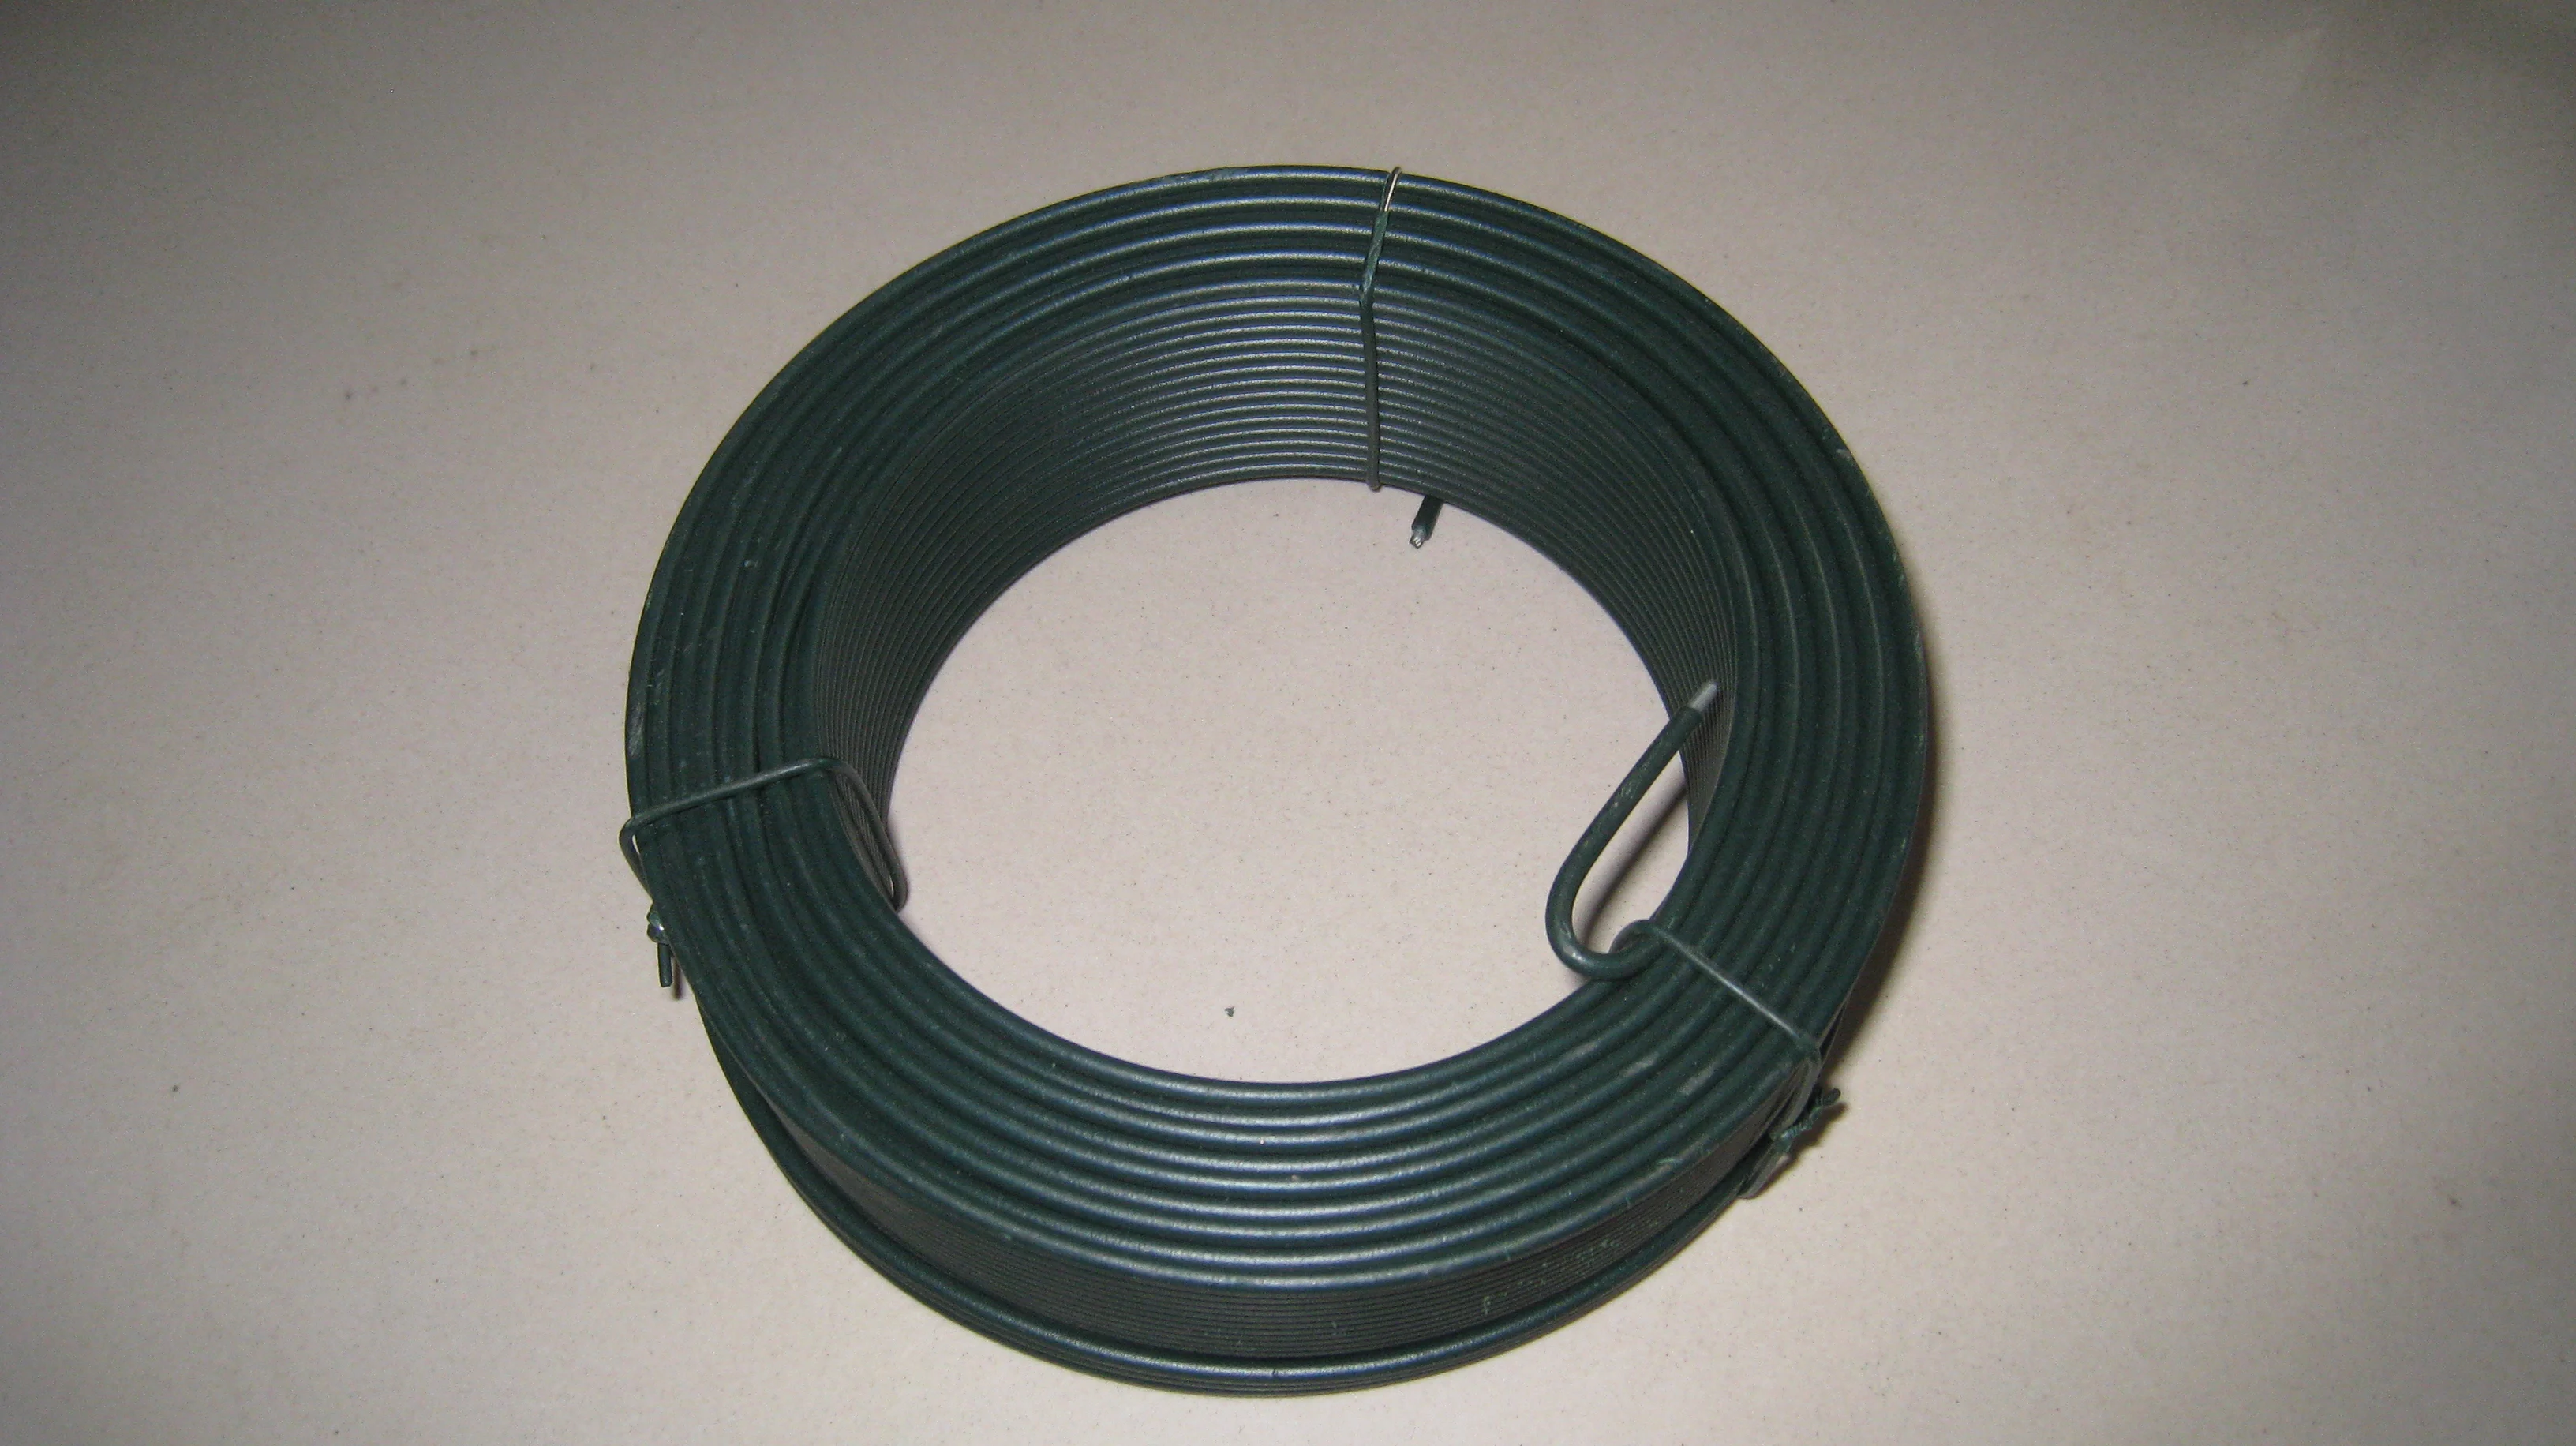 Wholesale Bulk 9 Gauge PVC Coated Galvanized Wire 150M Per Roll